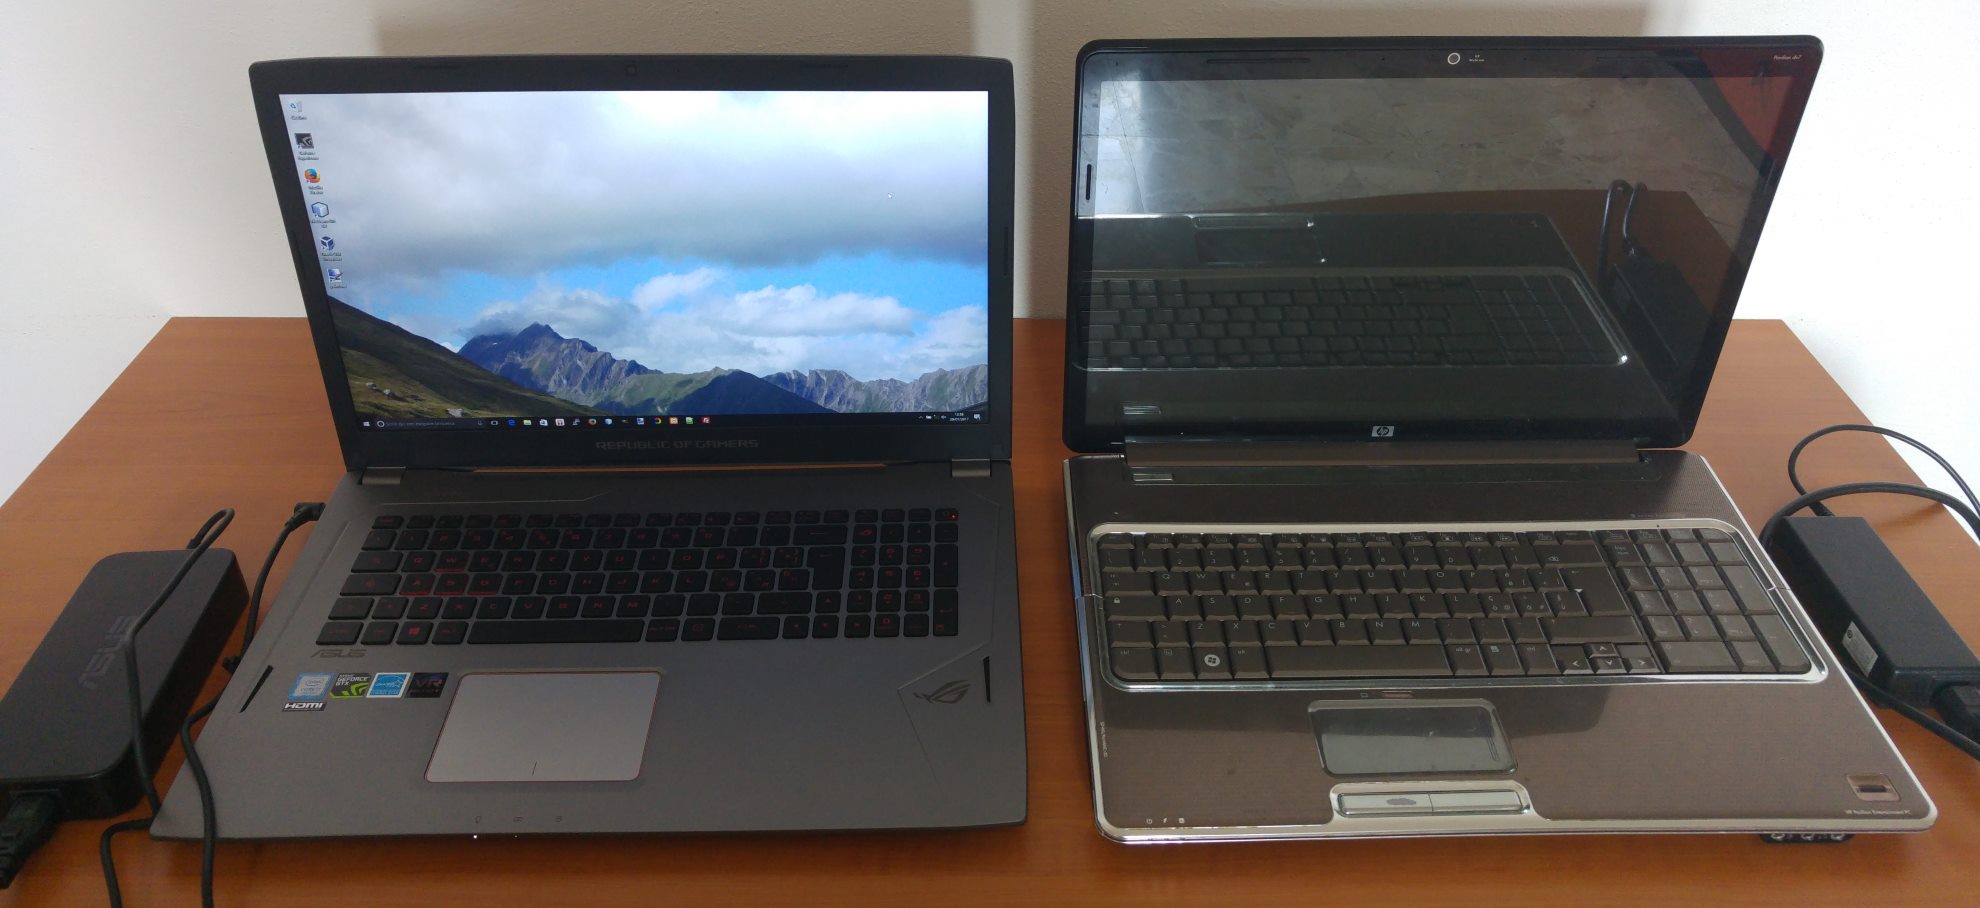 Notebook  Asus ROG GL702VM-BA135T (a sinistra) e HP Pavilion dv2760el (a destra)